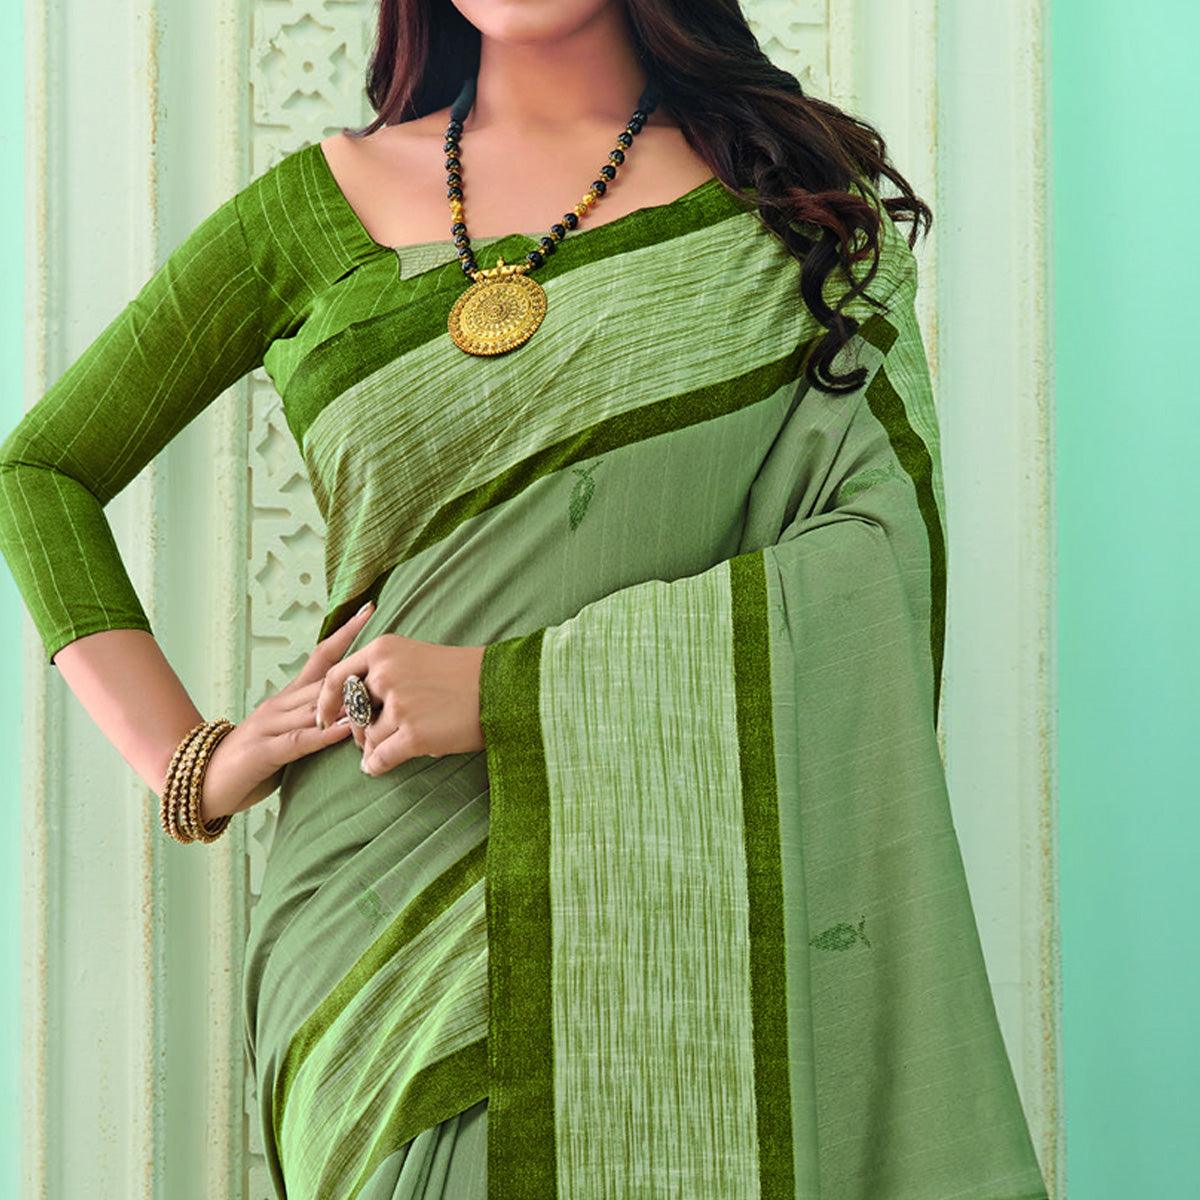 Lovely Green Colored Casual Wear Printed Bhagalpuri Saree - Peachmode